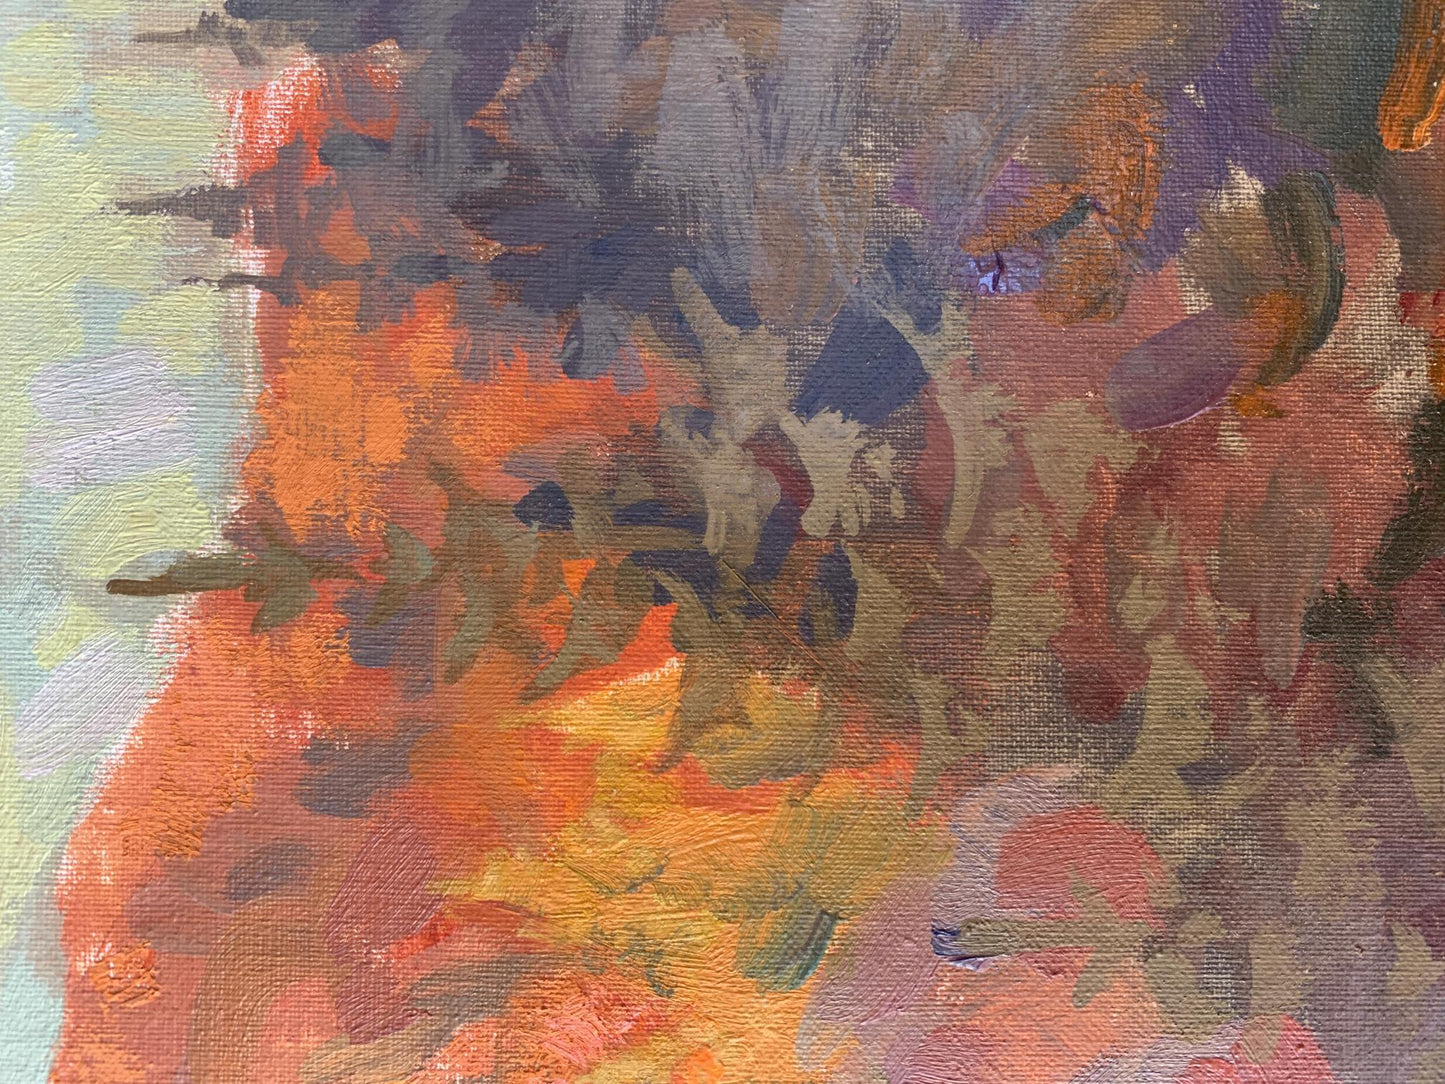 Oil painting Autumn mountains Batrakov Vladimir Grigorievich